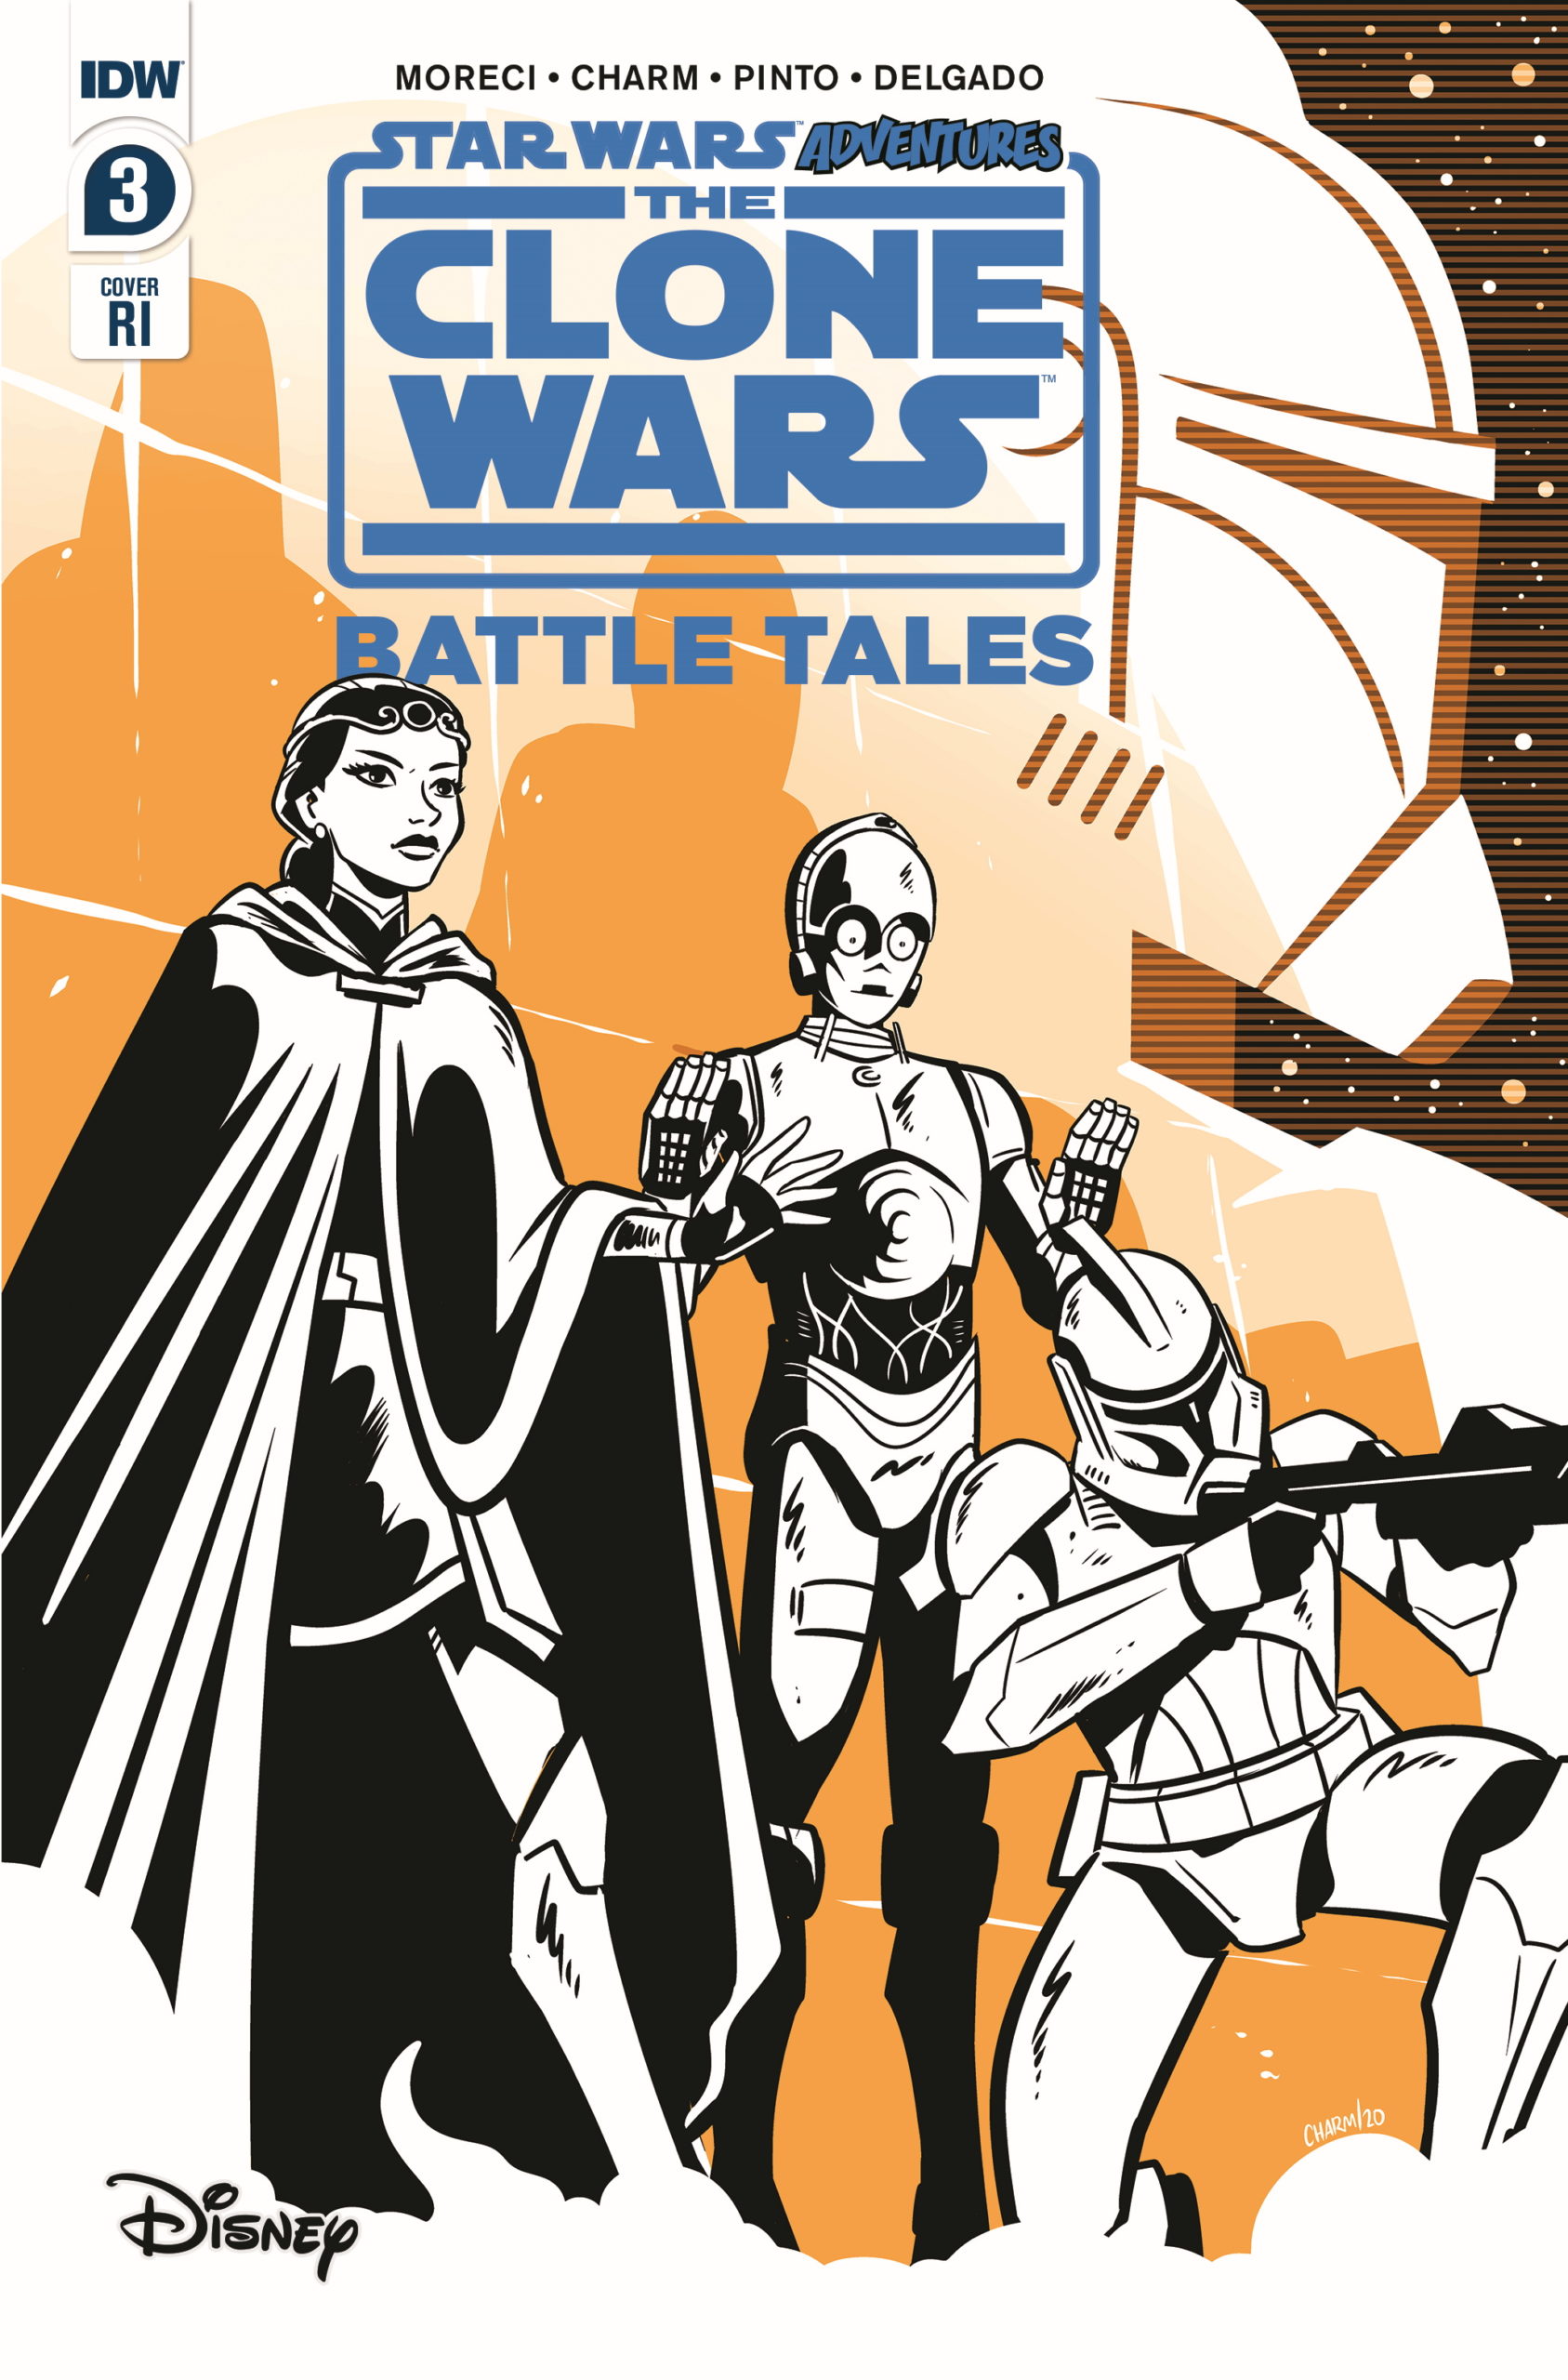 The Clone Wars - Battle Tales #3 (Derek Charm Variant Cover) (15.04.2020)